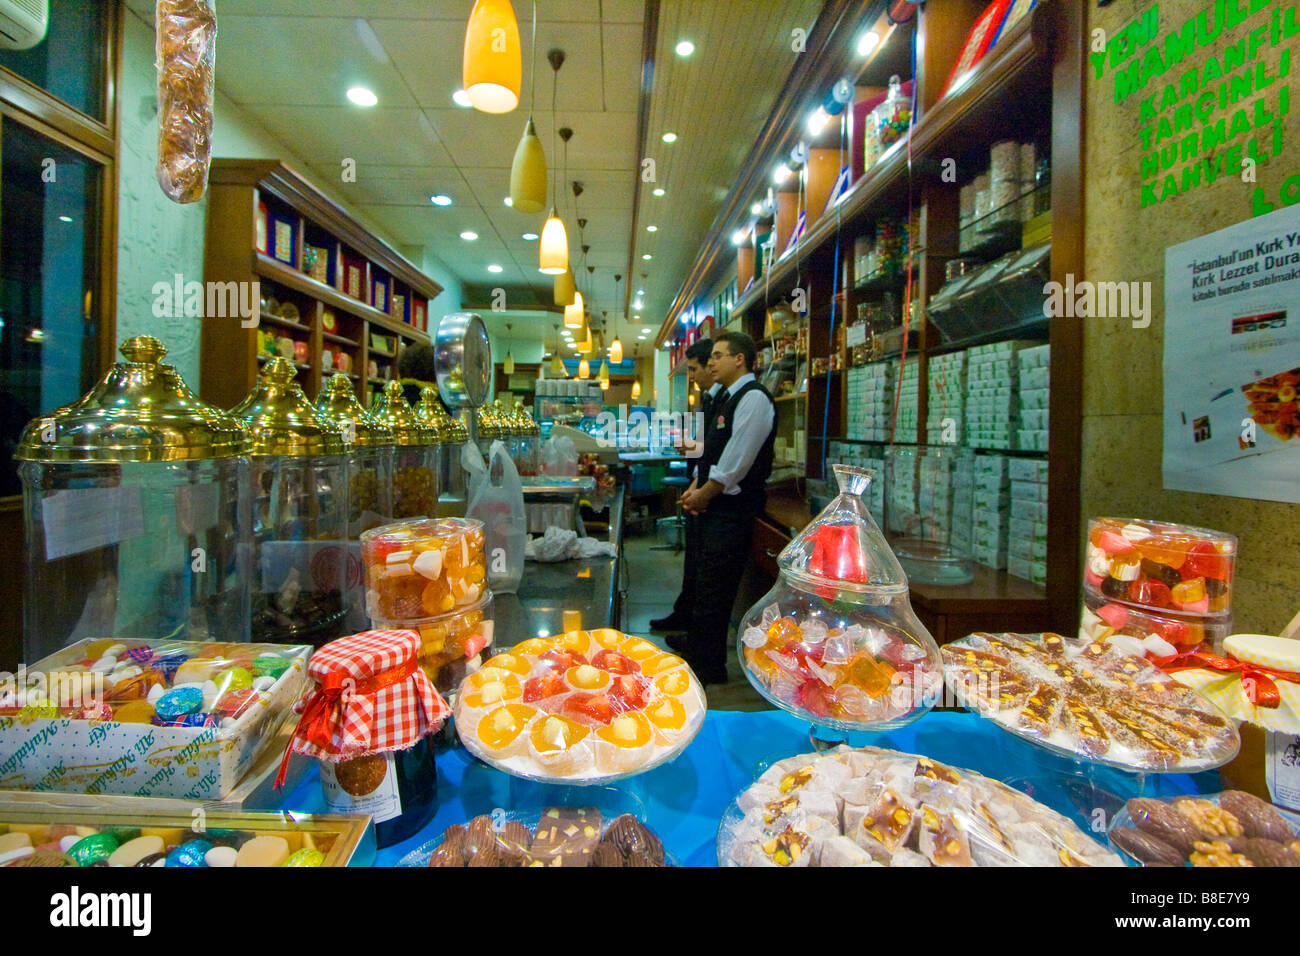 Ali Muhiddinhaci Bekir Original Turkish Delight-Konditorei auf der Istiklal Caddesi in Istanbul Türkei Stockfoto